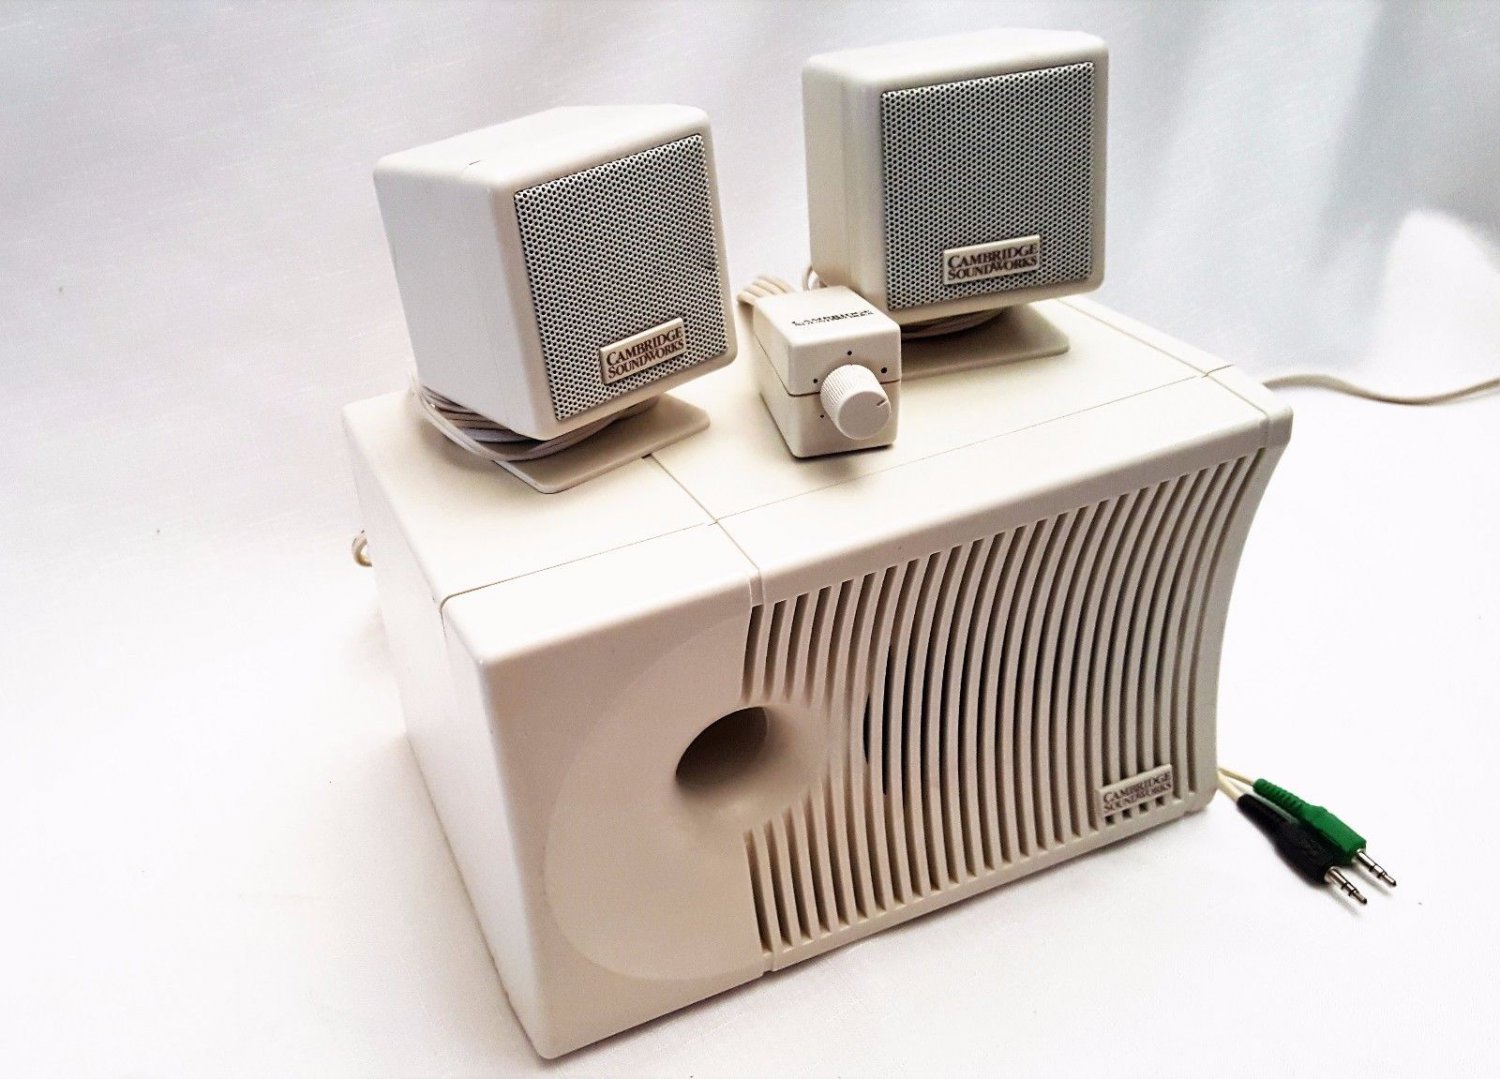 cambridge soundworks speakers sbs52 take apart